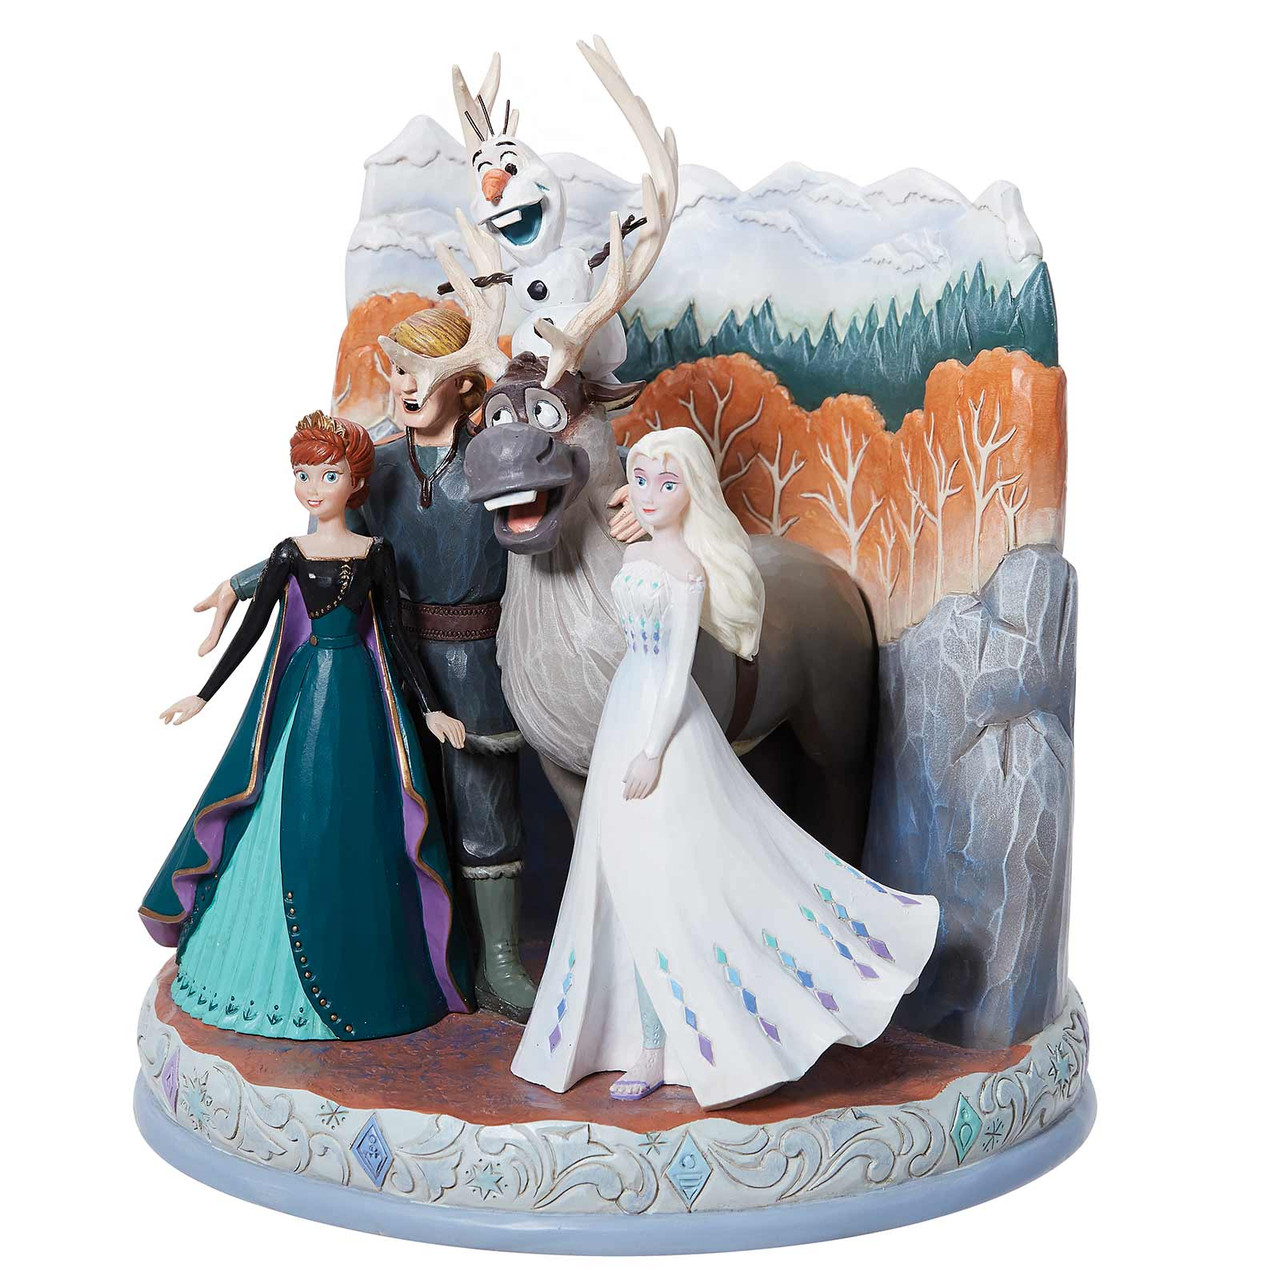 Disney Traditions Frozen 2 Scene Figurine by Jim Shore, 6013077